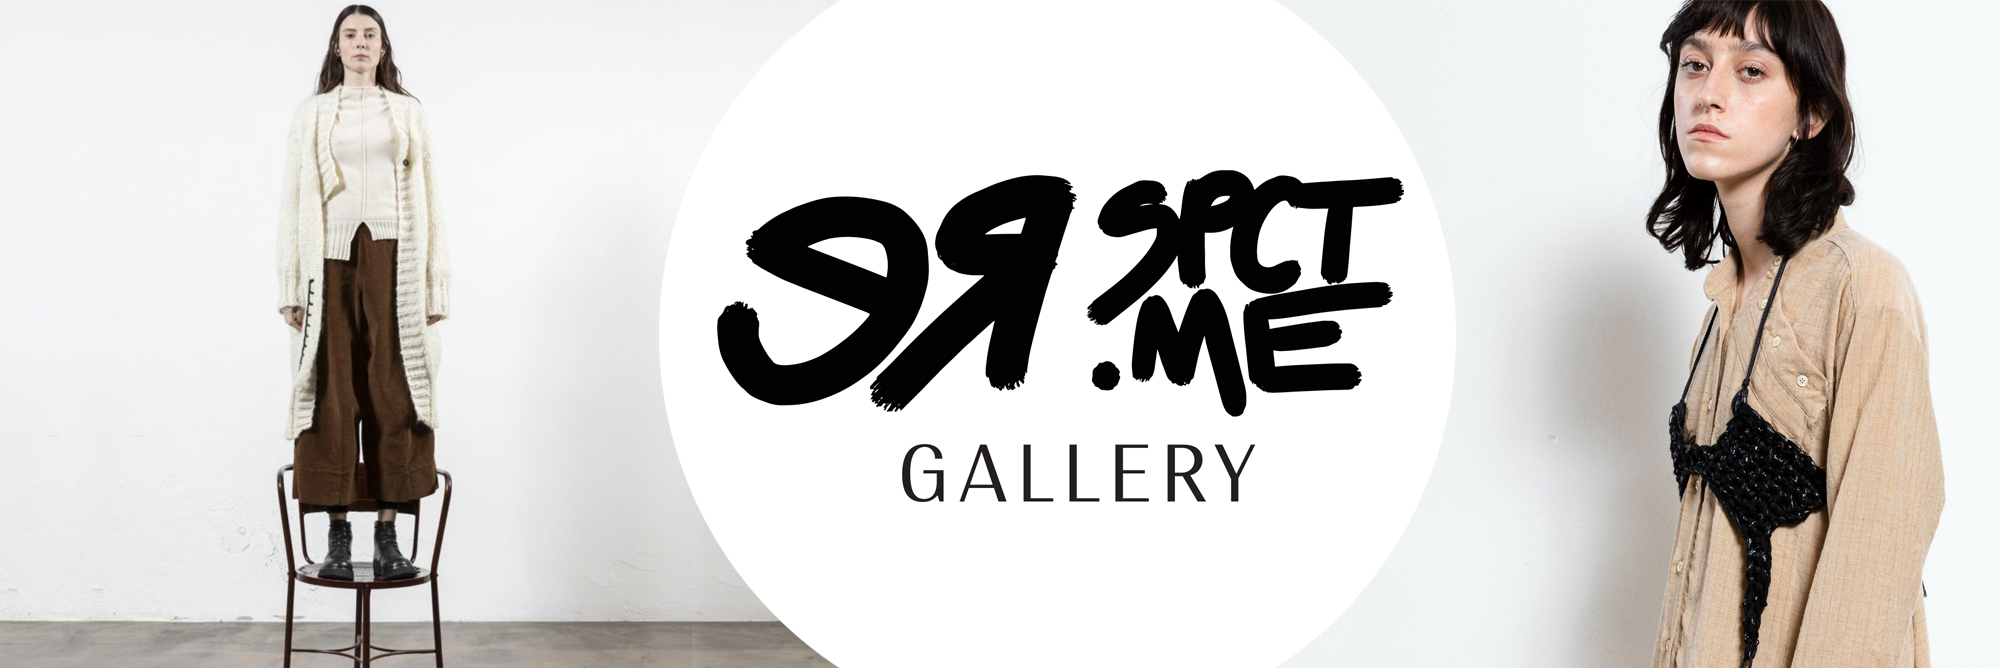 RESPCT.ME Gallery – art meets fashion (Kunst trifft Mode)